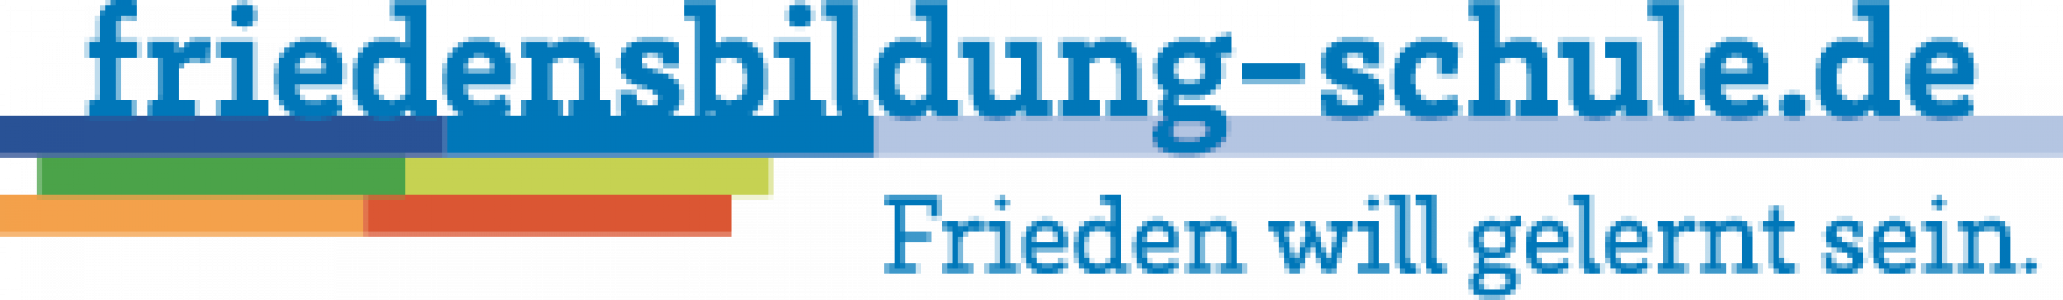 Logo friedensbildung-schule.de